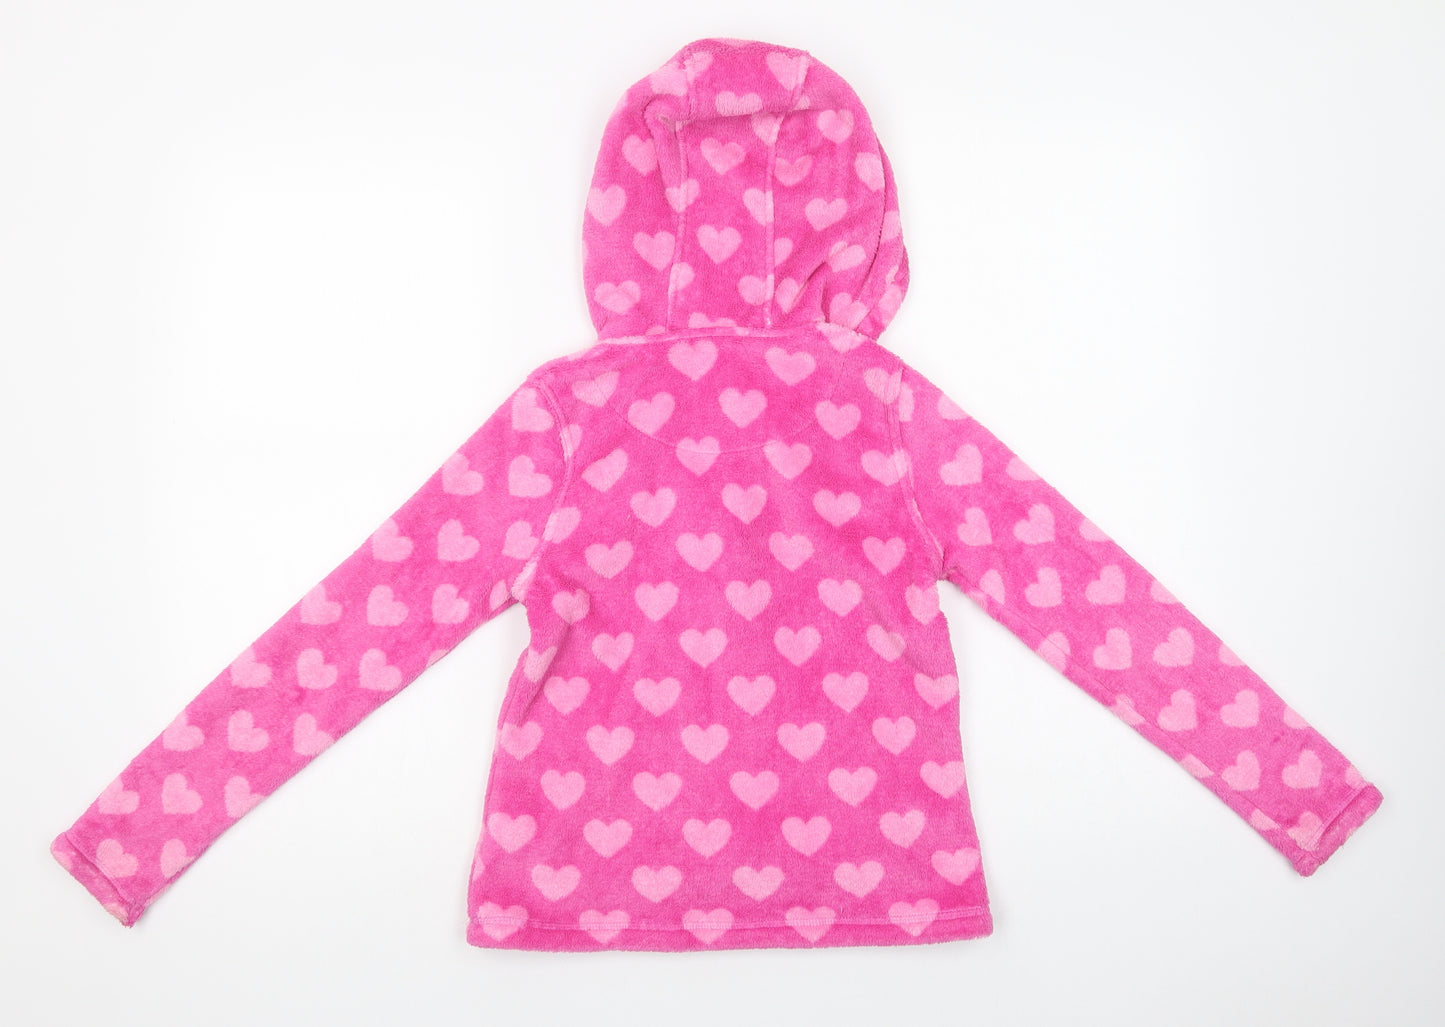 Matalan Girls Pink Geometric Polyester Top Lounge Set Size 10-11 Years  Pullover - Heart Print